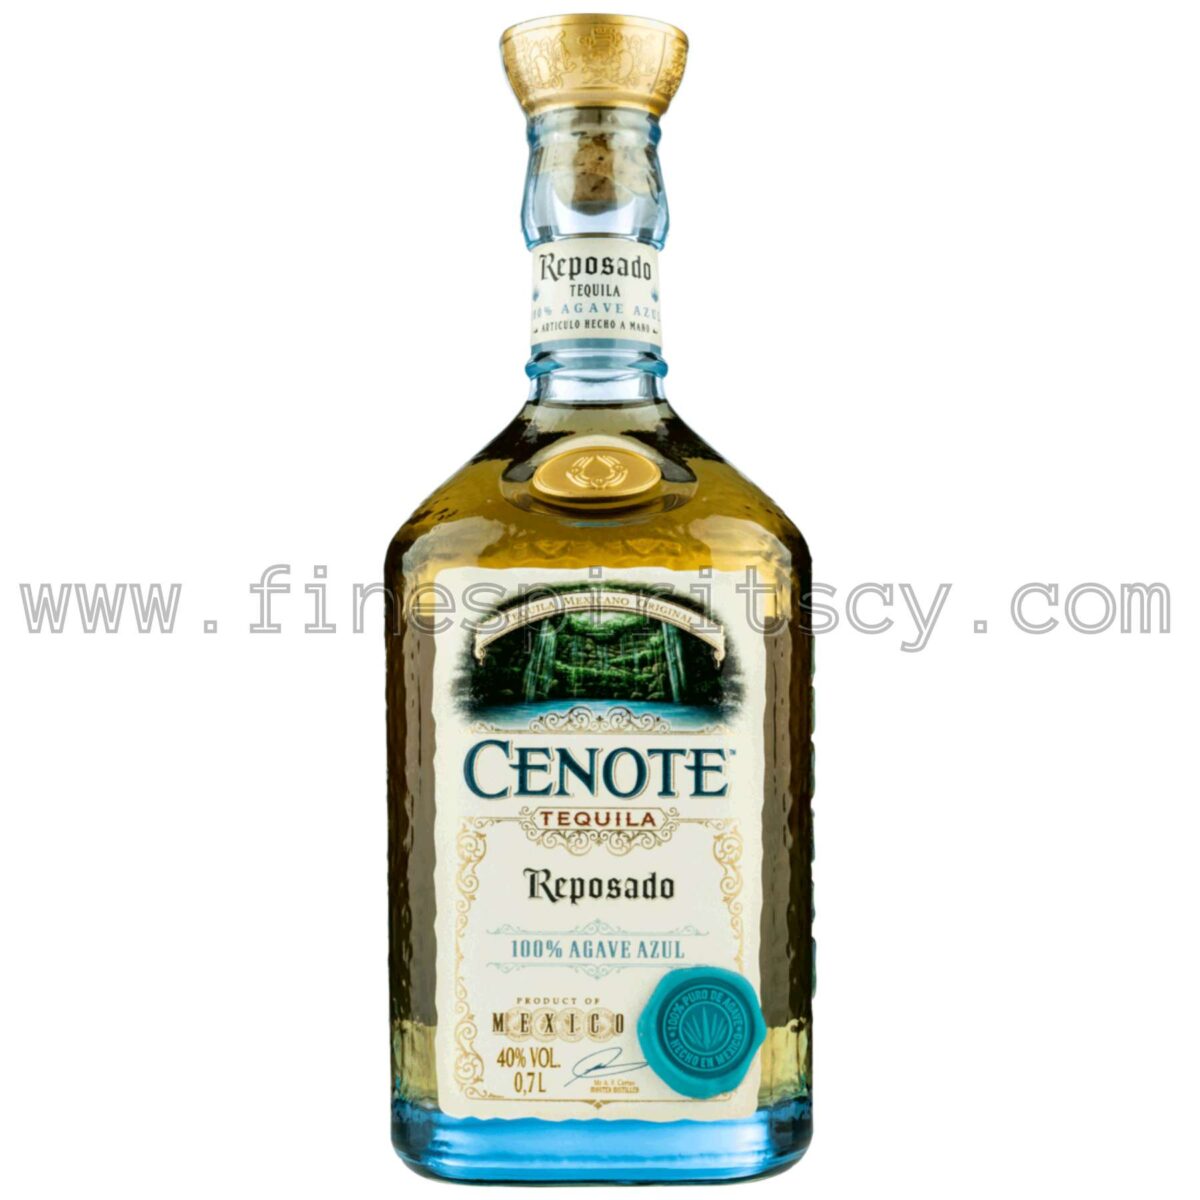 Cenote Reposado 700ml 70cl 0.7L Price Cyprus Order Online Tequila FSCY Buy Shop